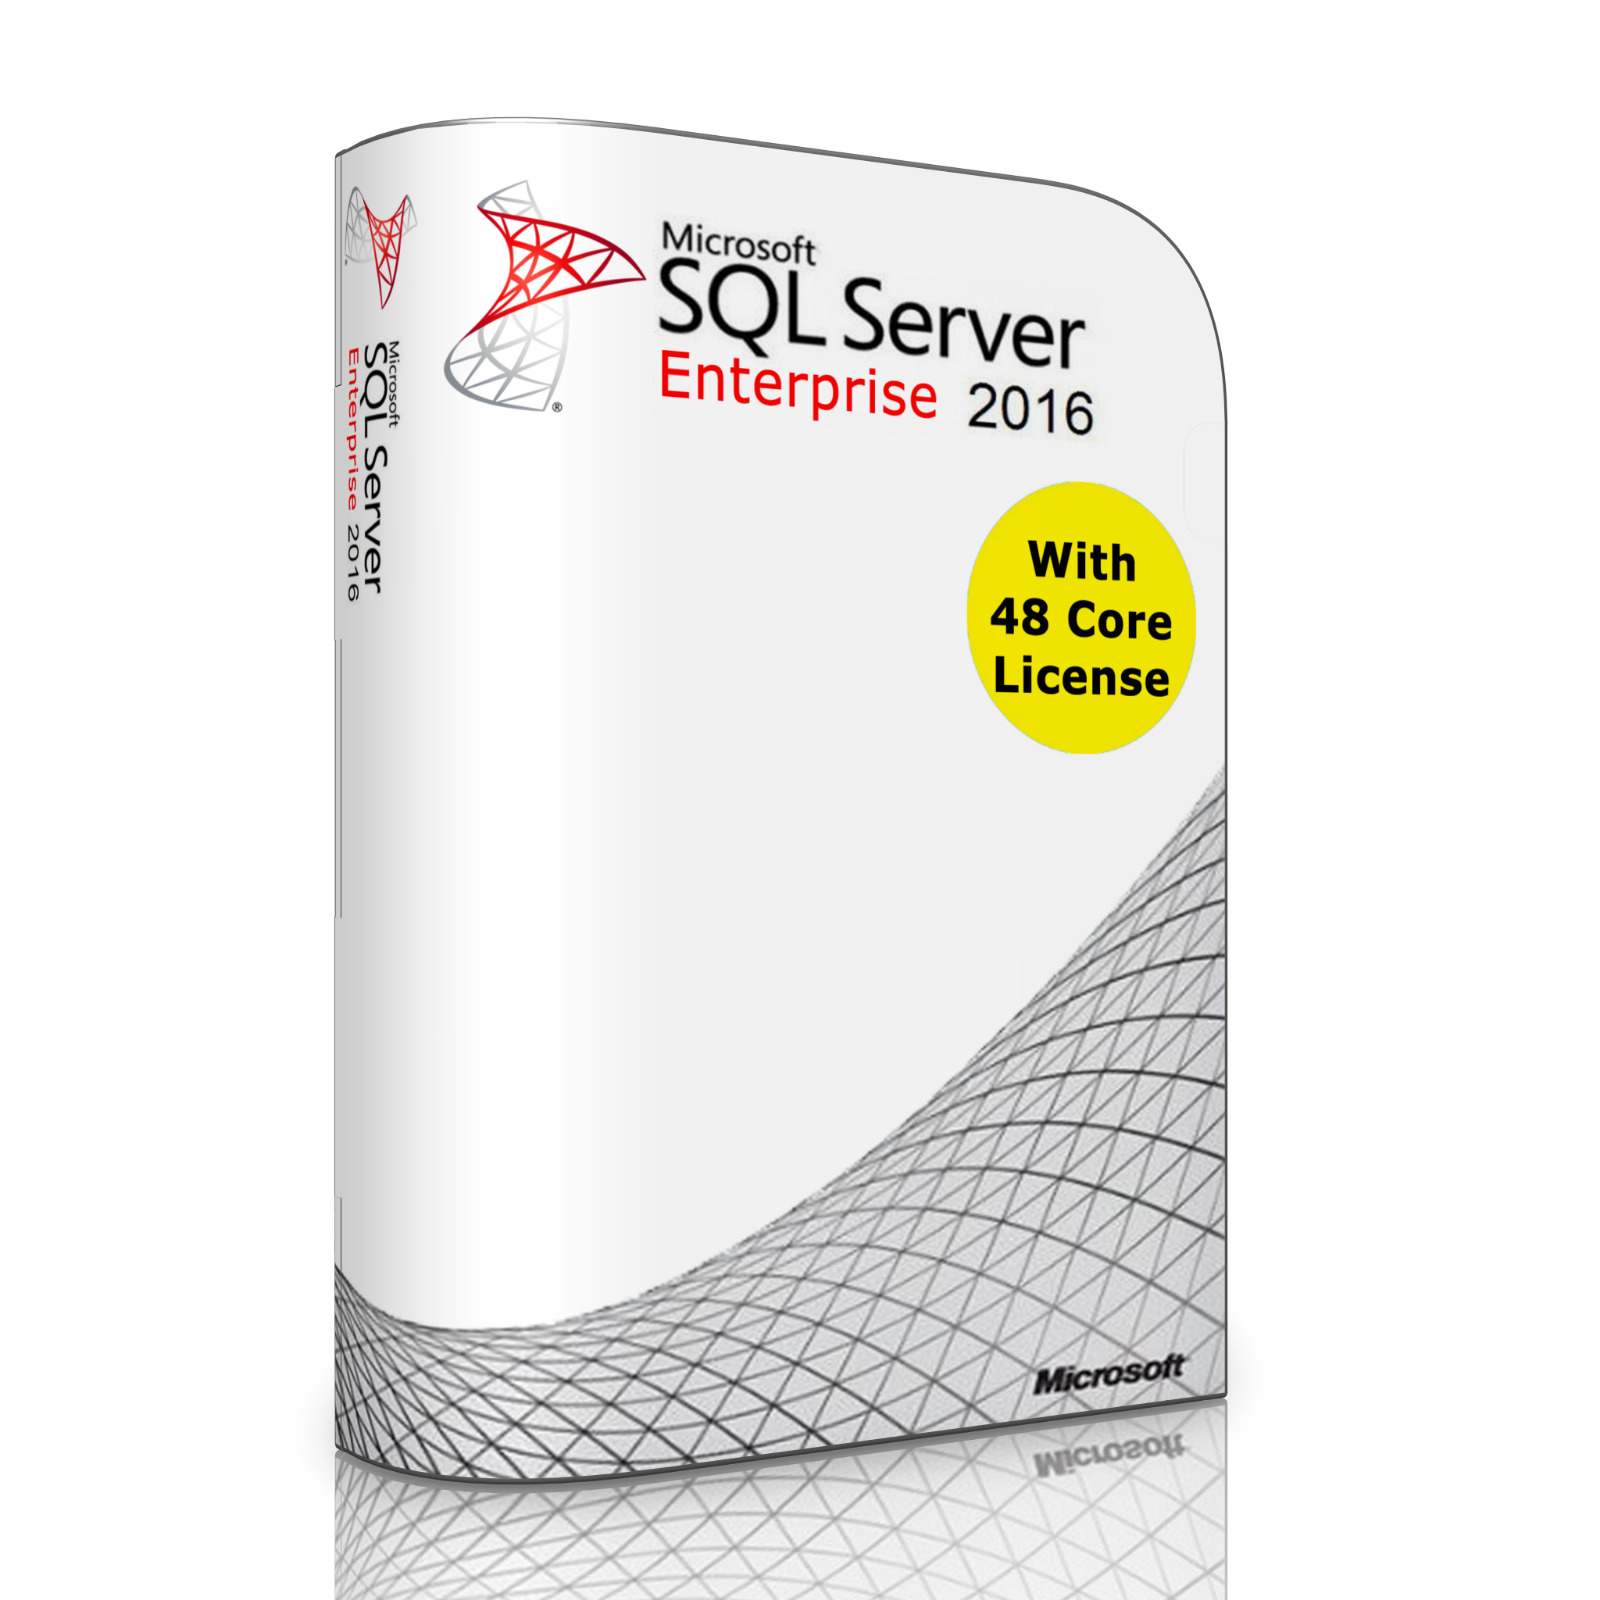 Microsoft SQL Server 2016 Enterprise with 48 Core License, unlimited User CALs